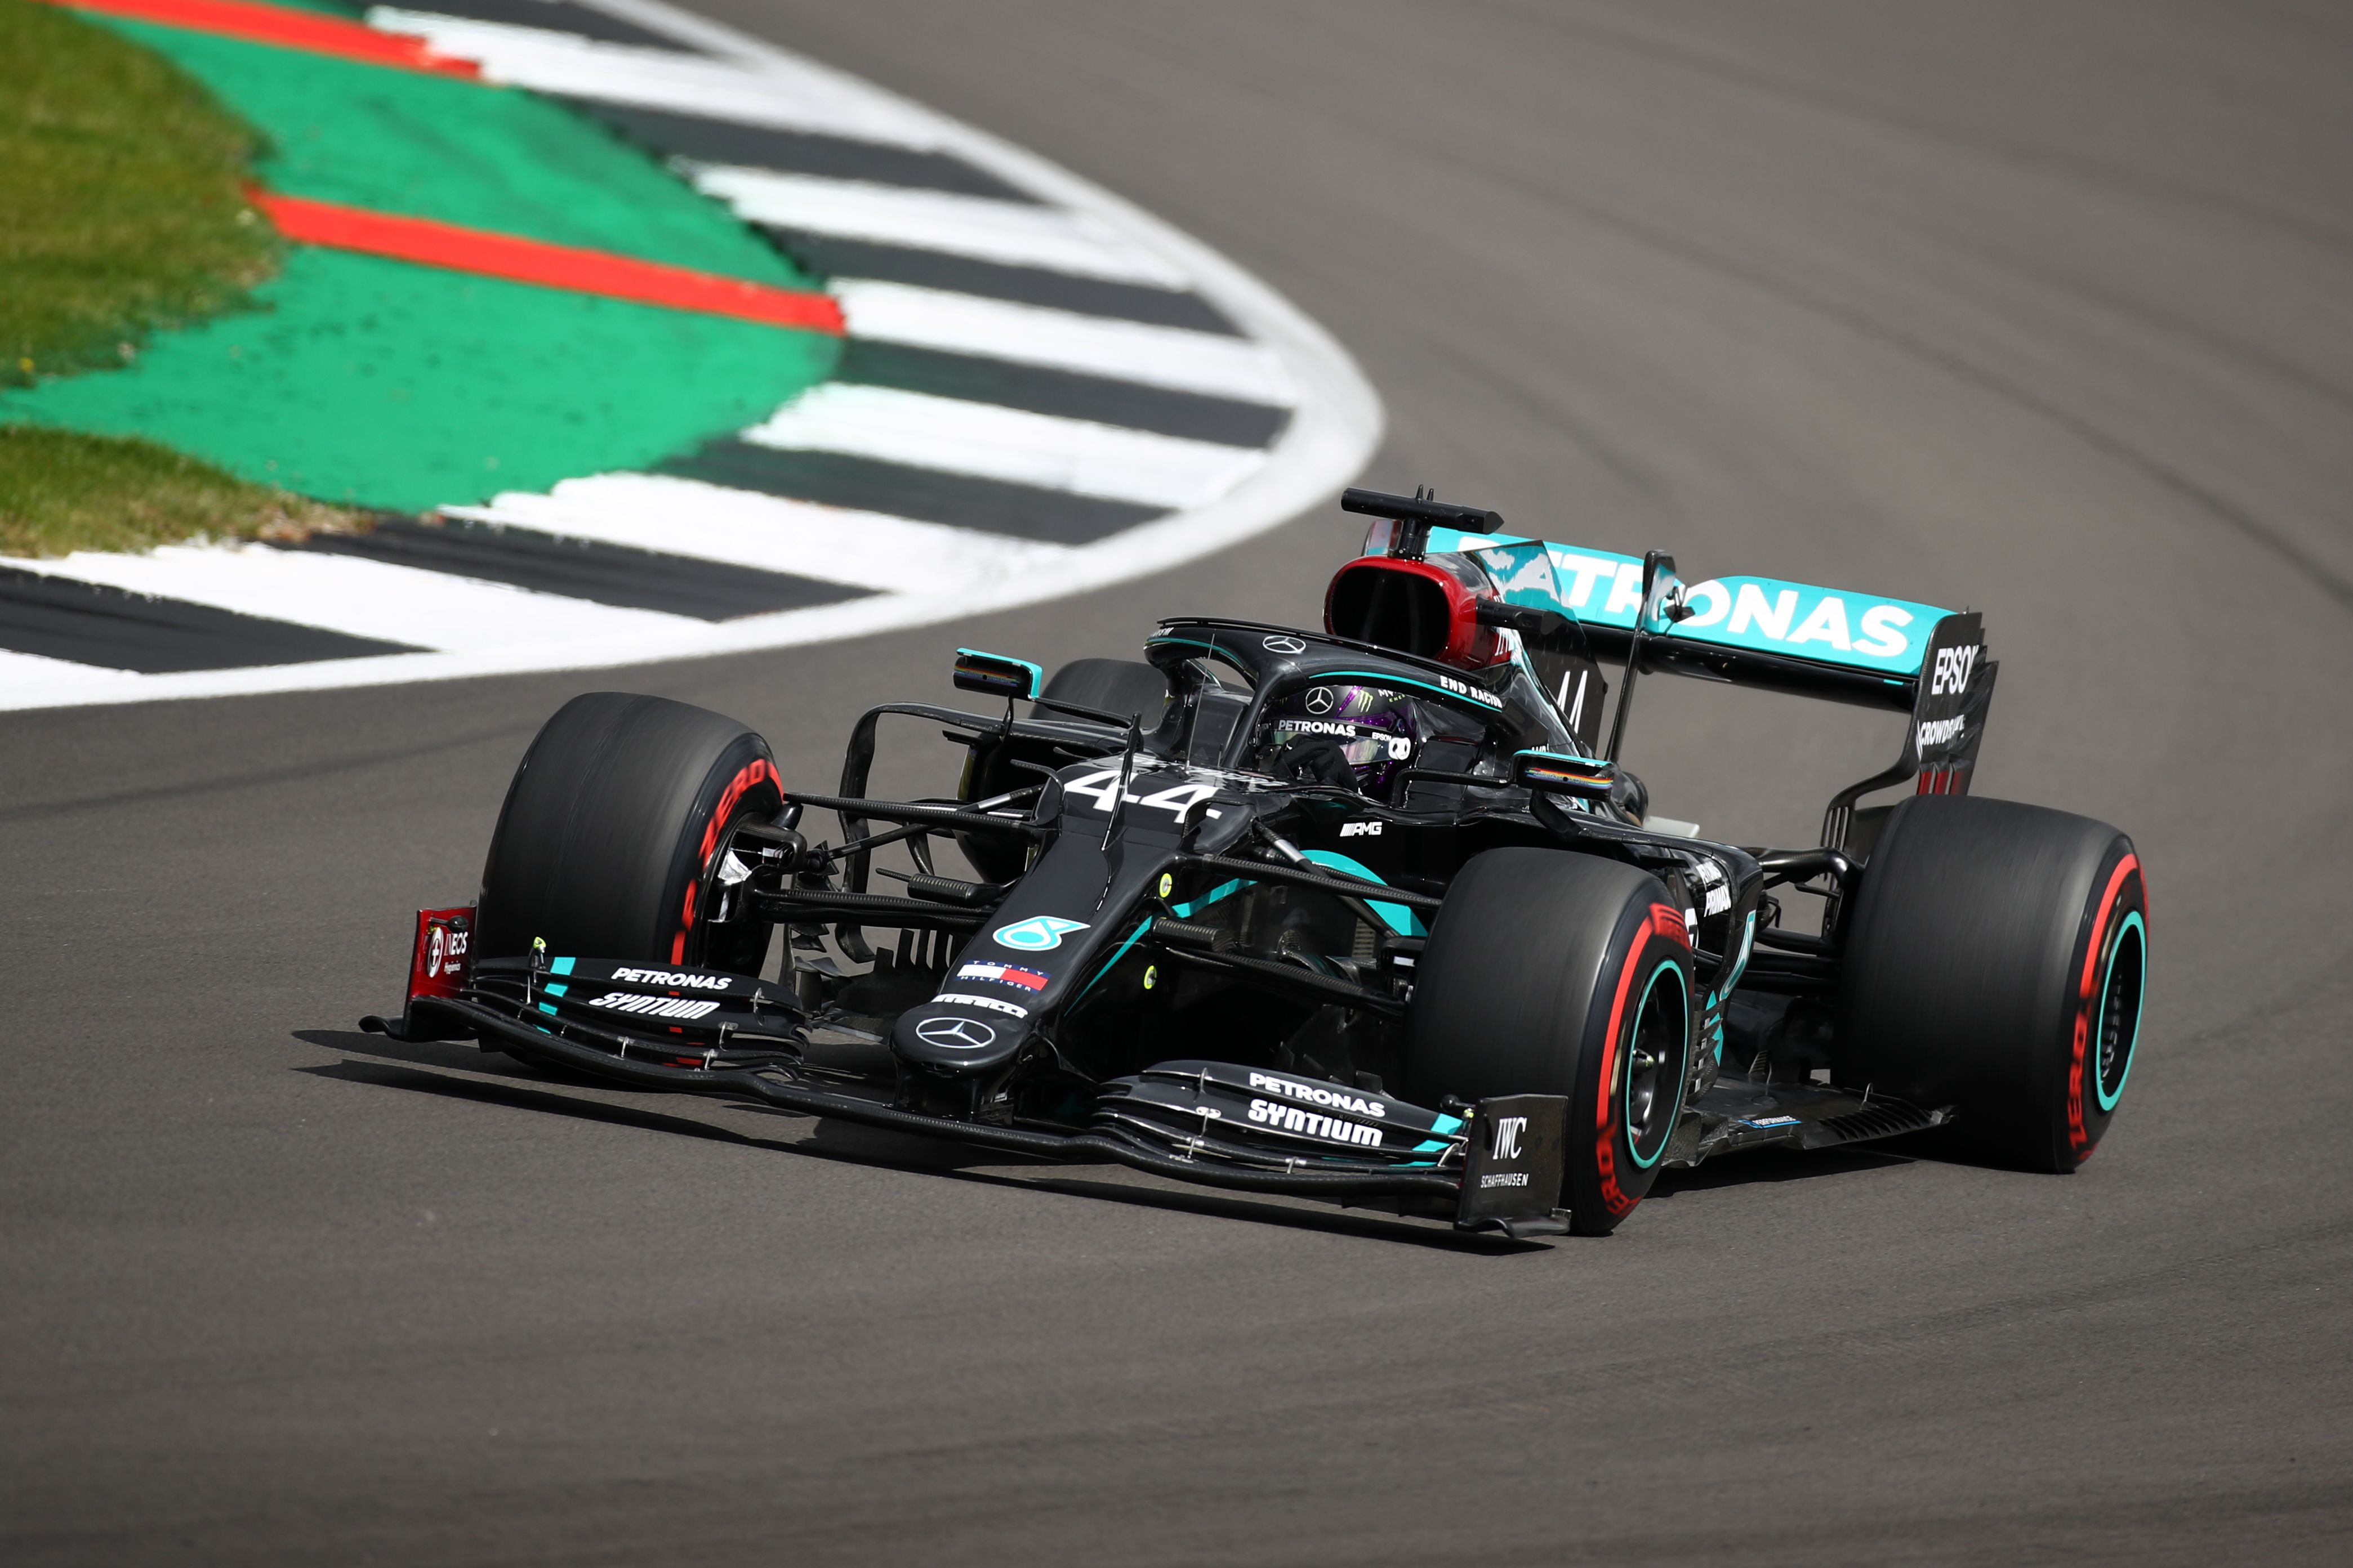 Lewis Hamilton wins his fourth British Grand Prix at Silverstone